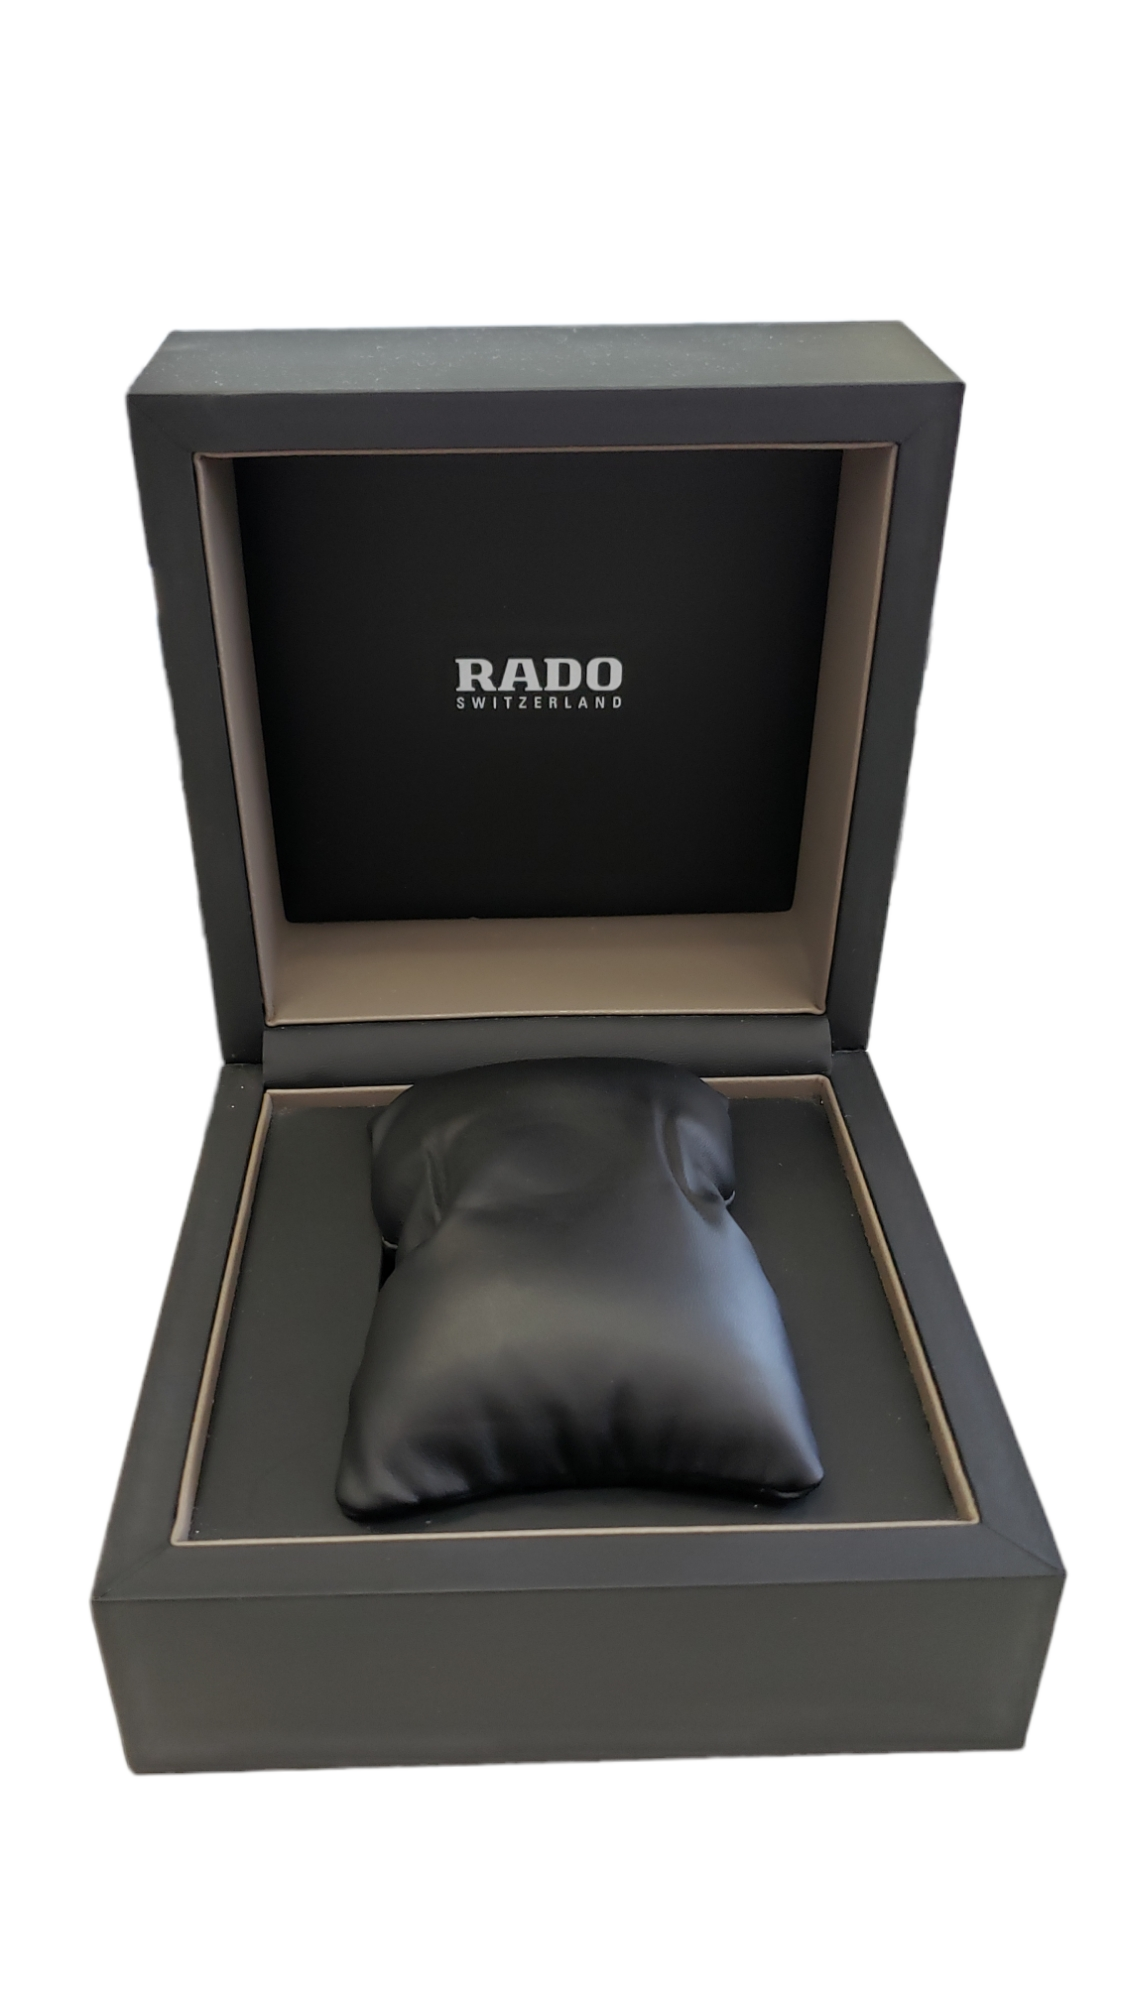 Rado Switzerland Gold Plated Automatic Diastar Watch Men's Preowned